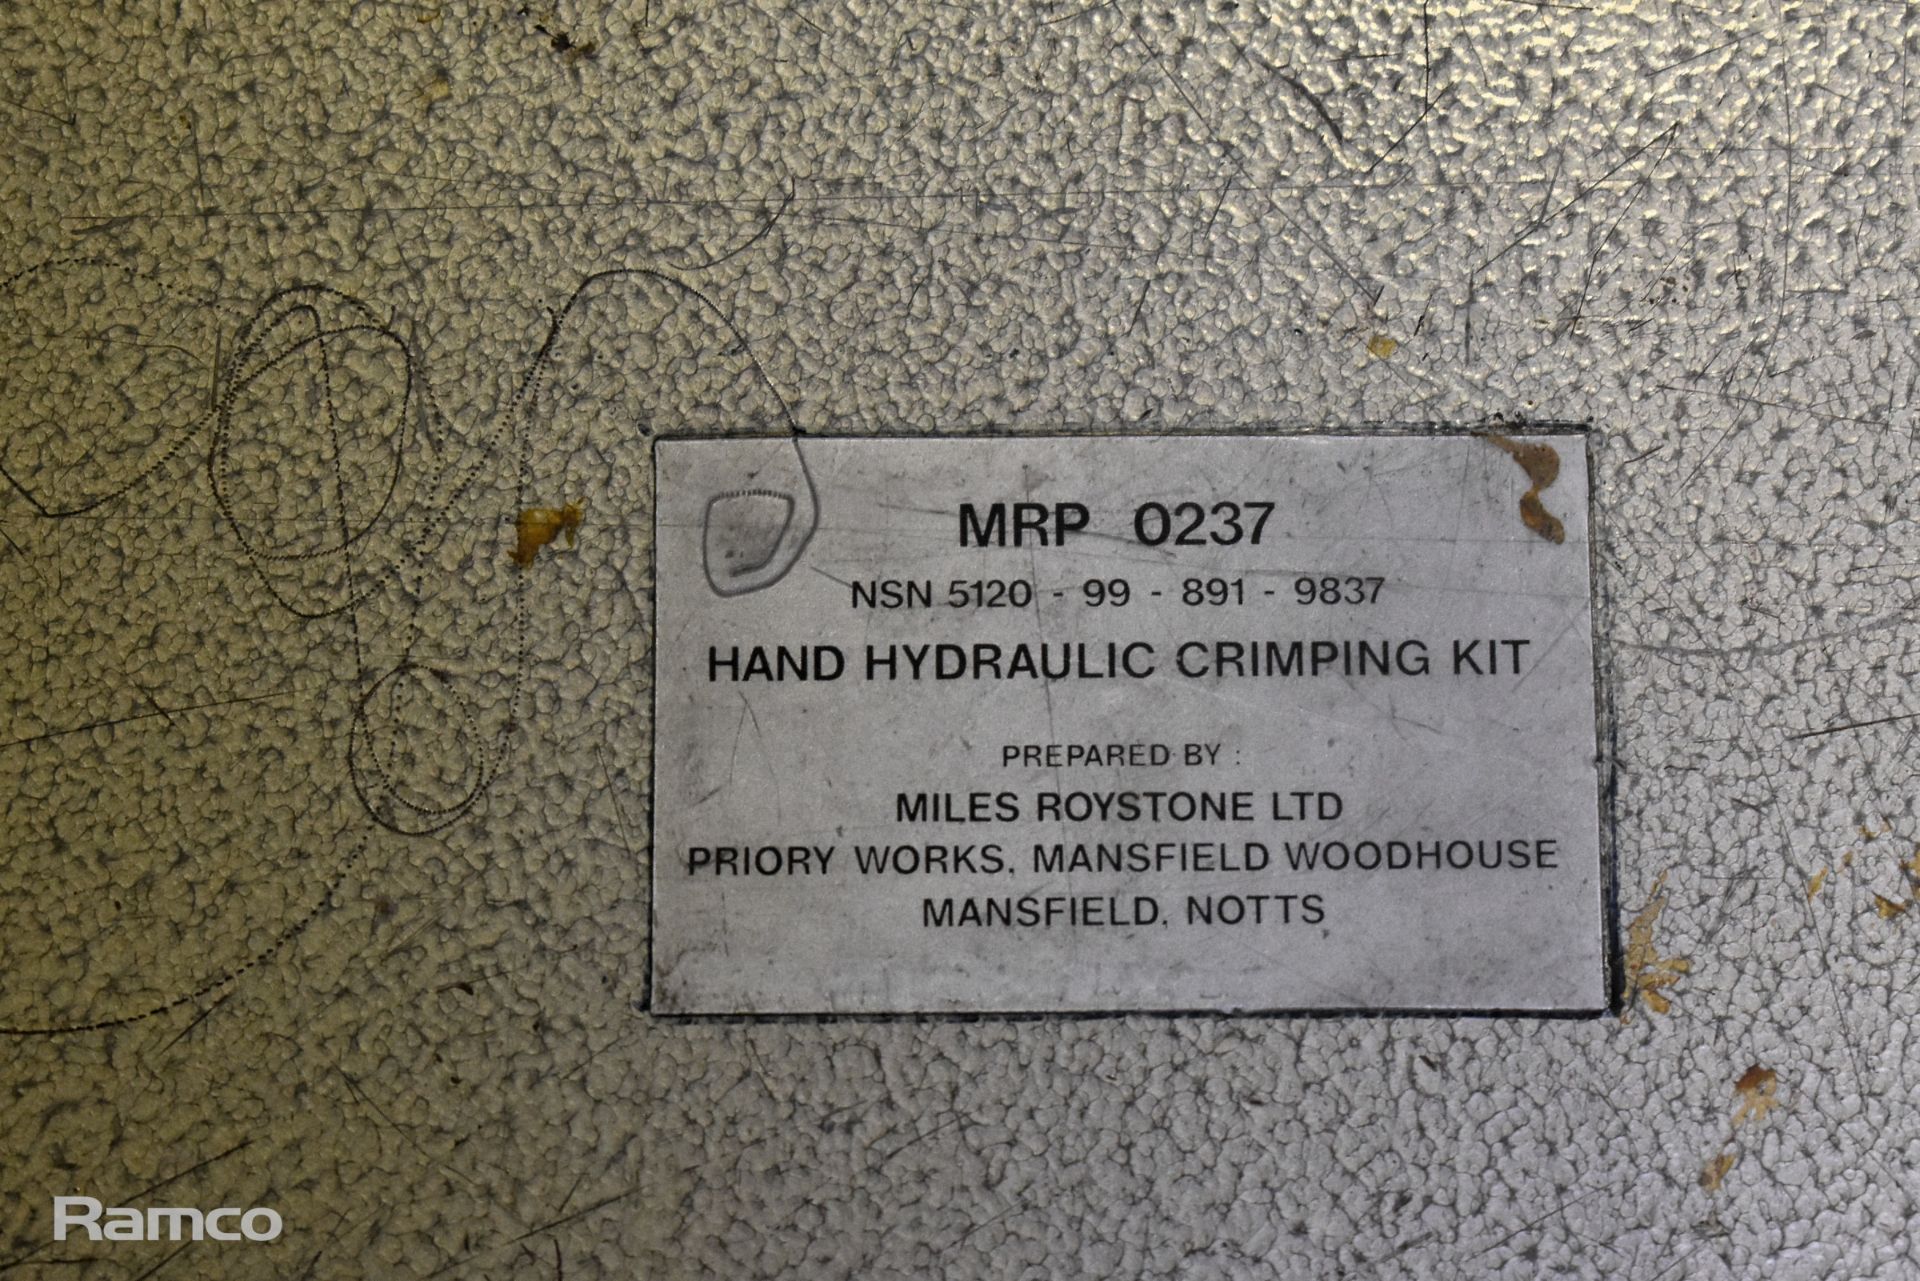 2x Glenair MRP0237 hand hydraulic crimping tool kits - 1 kit incomplete - Image 12 of 12